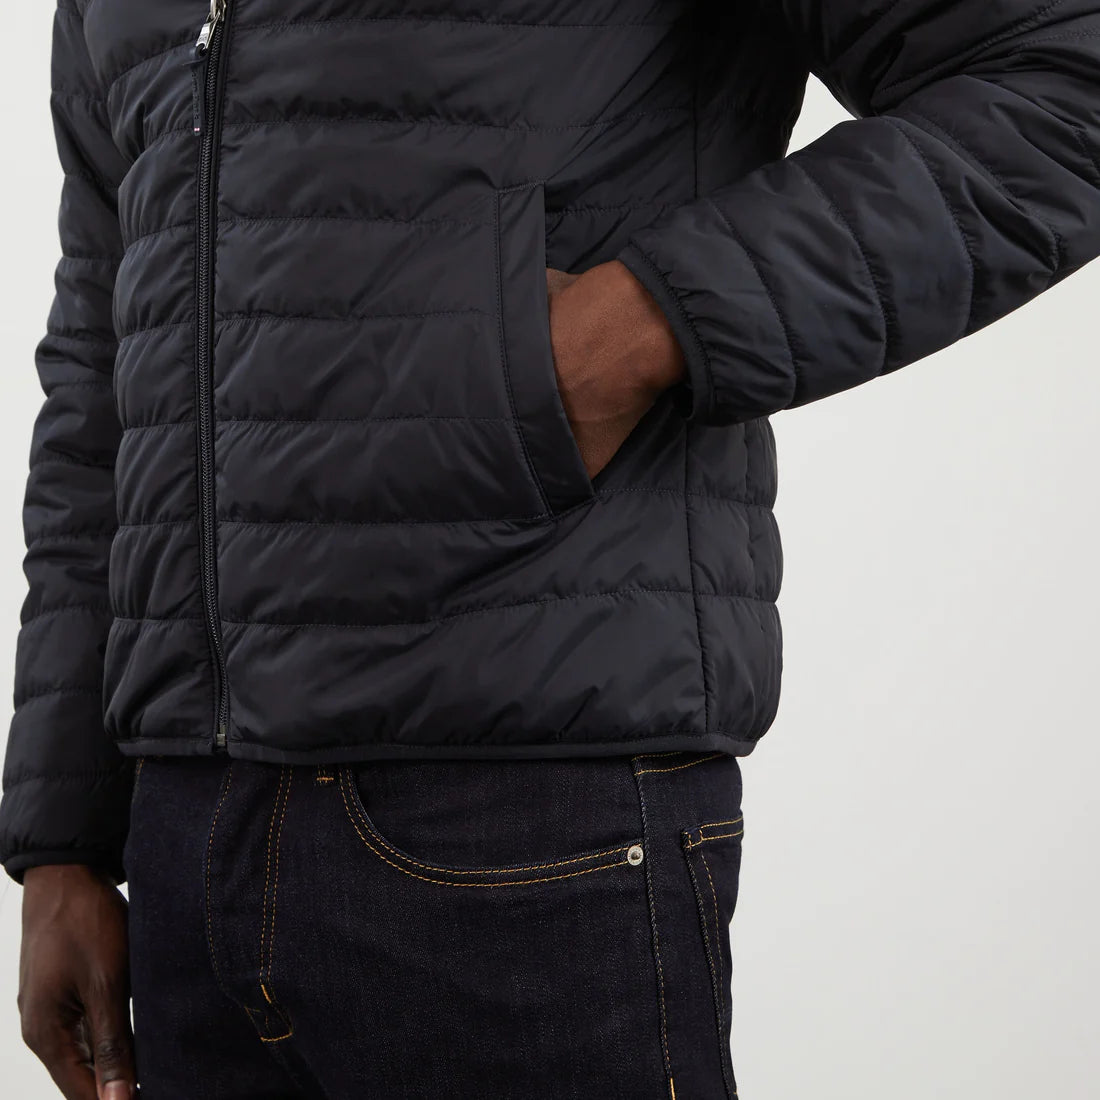 Eden Park Jackets & Coats, Lightweight, long-sleeved puffa jacket in dark blue